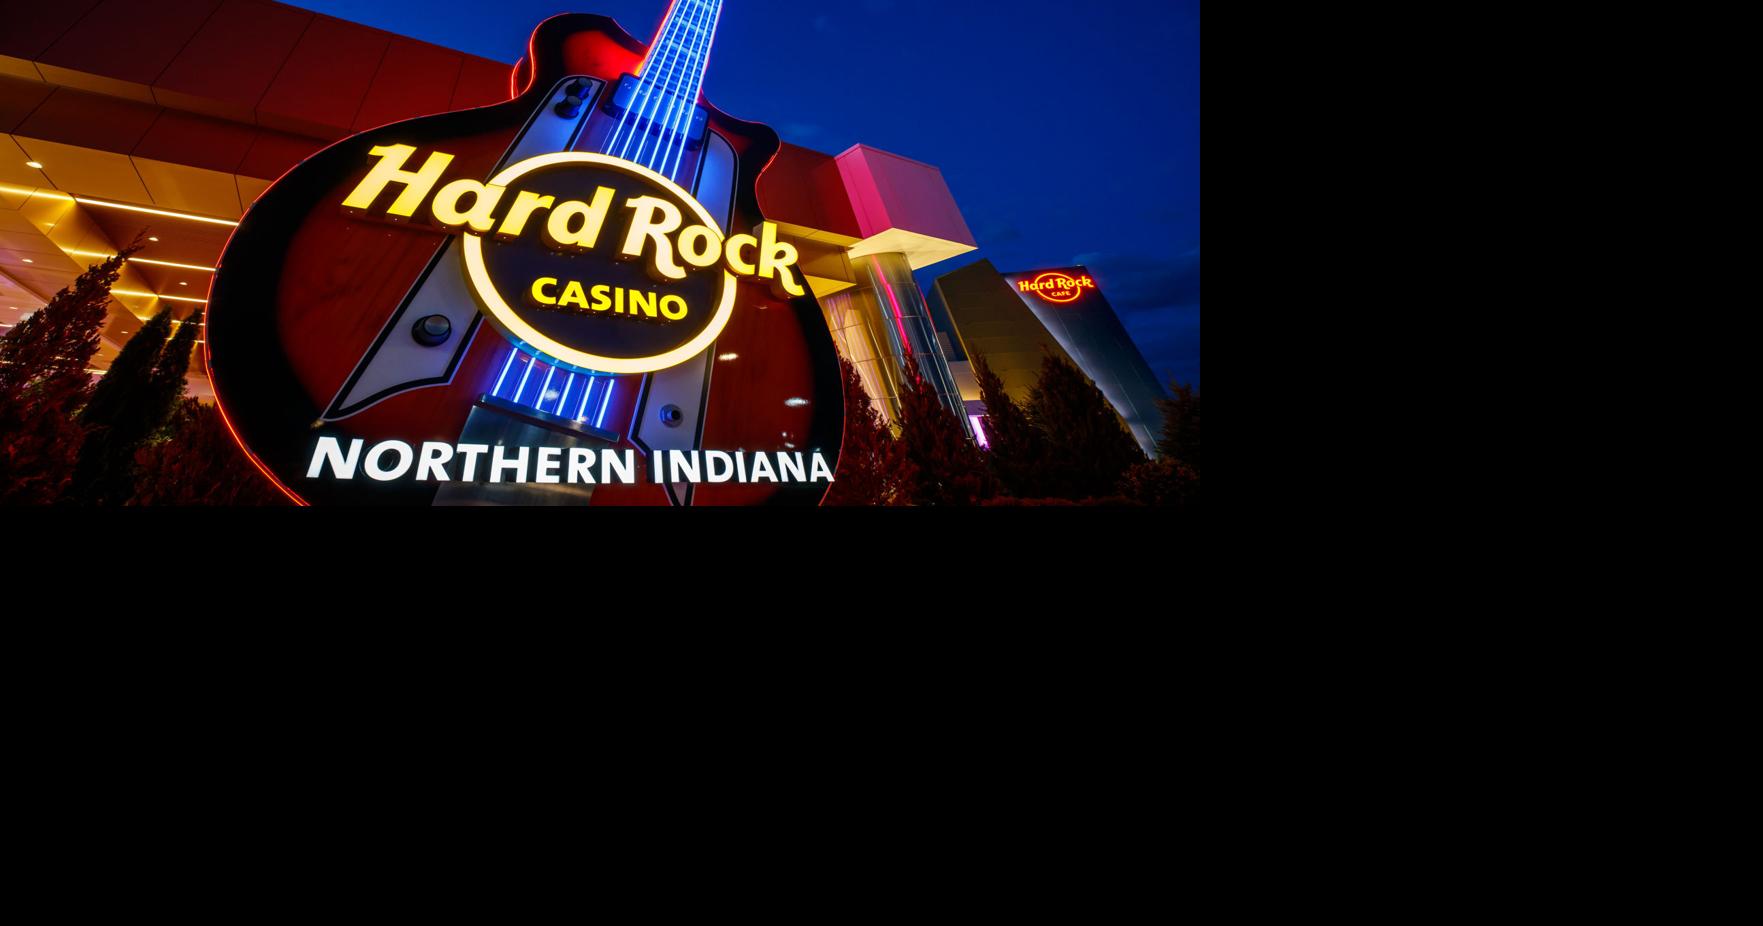 The Horseshoe Casino and Hotel at Night, Las Vegas, NV Editorial